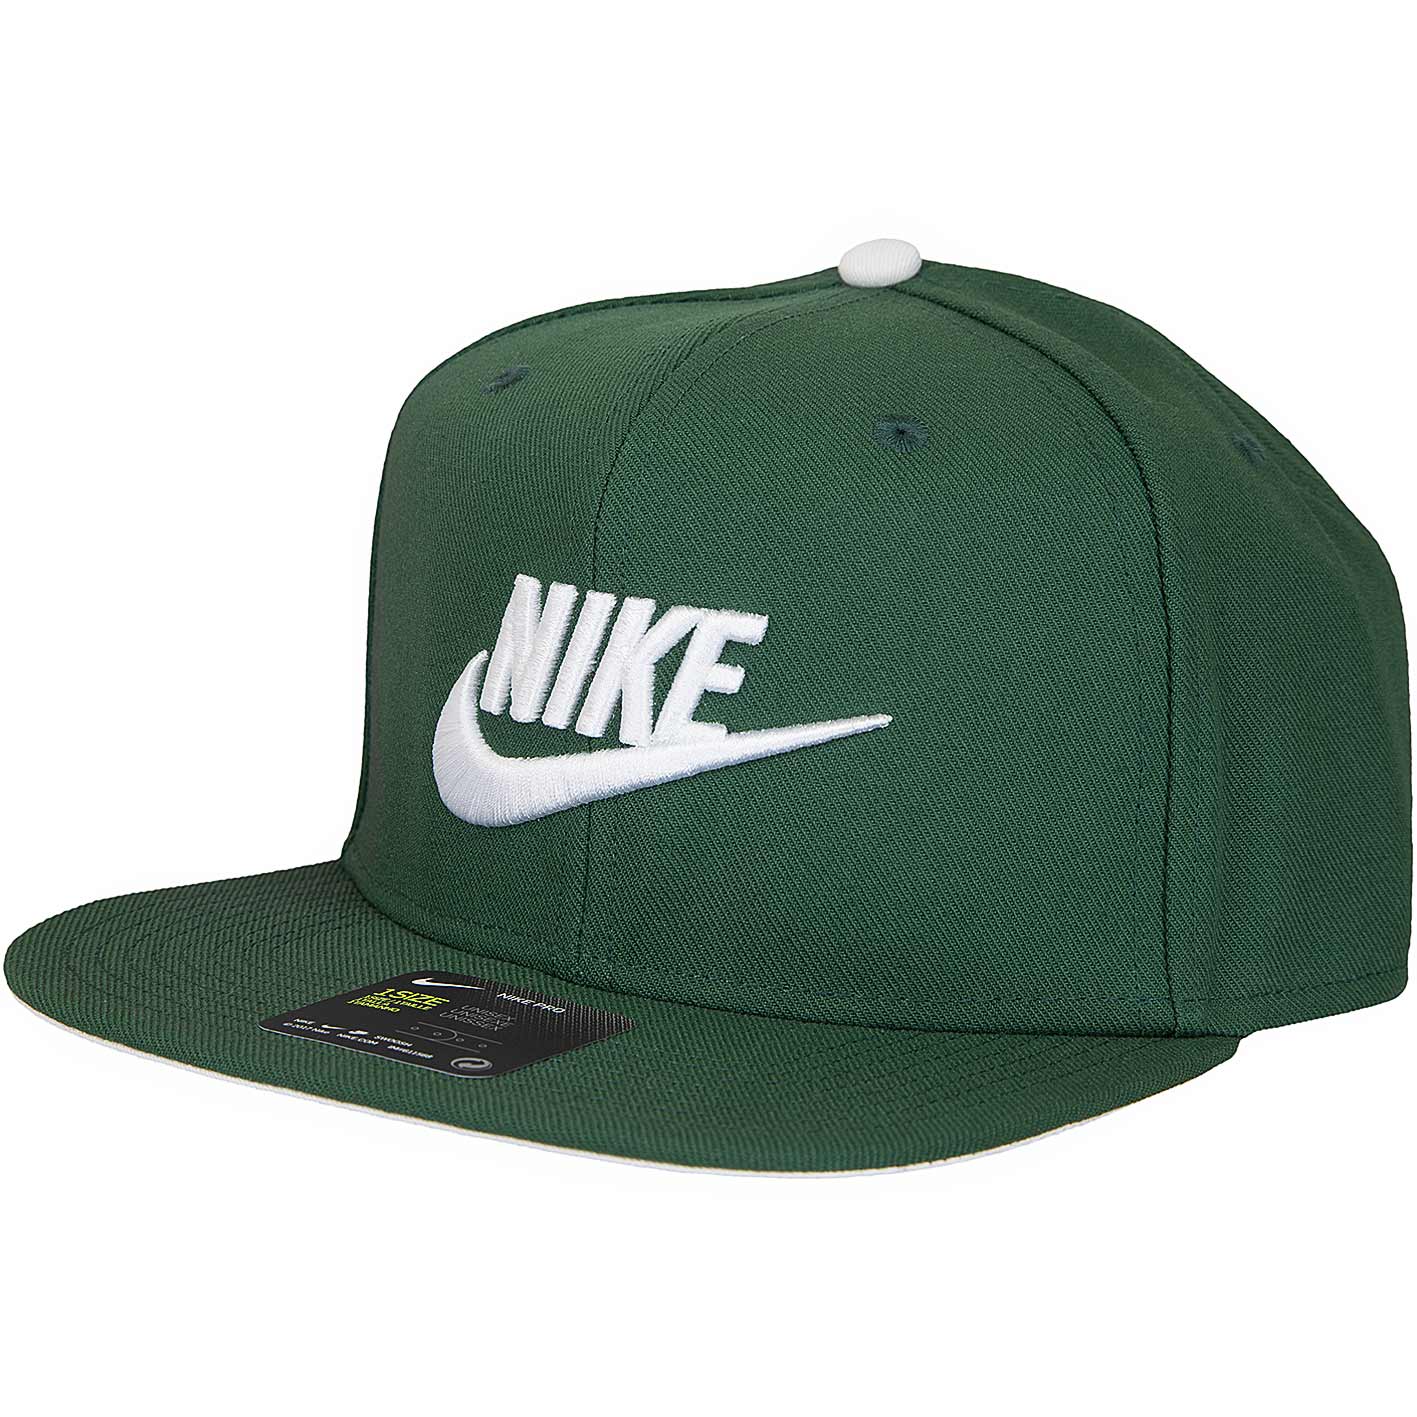 ☆ Nike Snapback Cap Futura grün/weiß - hier bestellen!